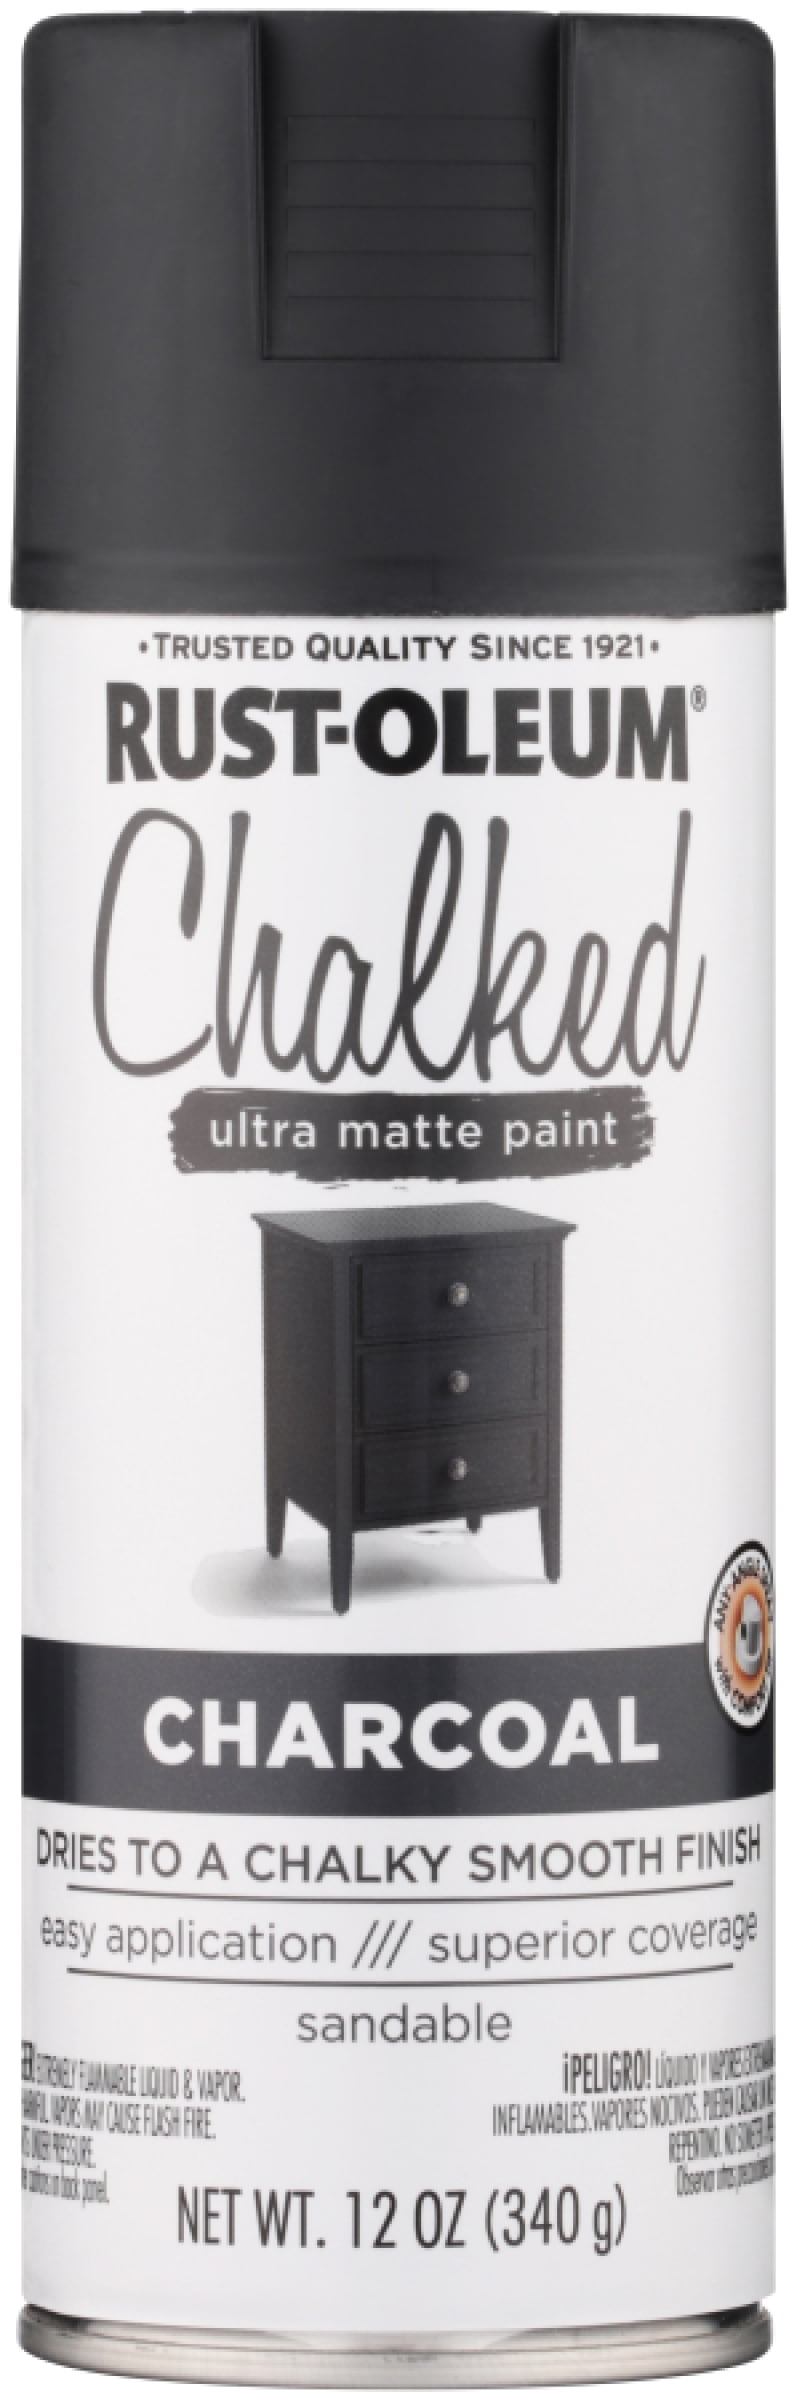 Rust Oleuma Chalked Spray Paint 12 Oz Aerosol Can Walmart Com